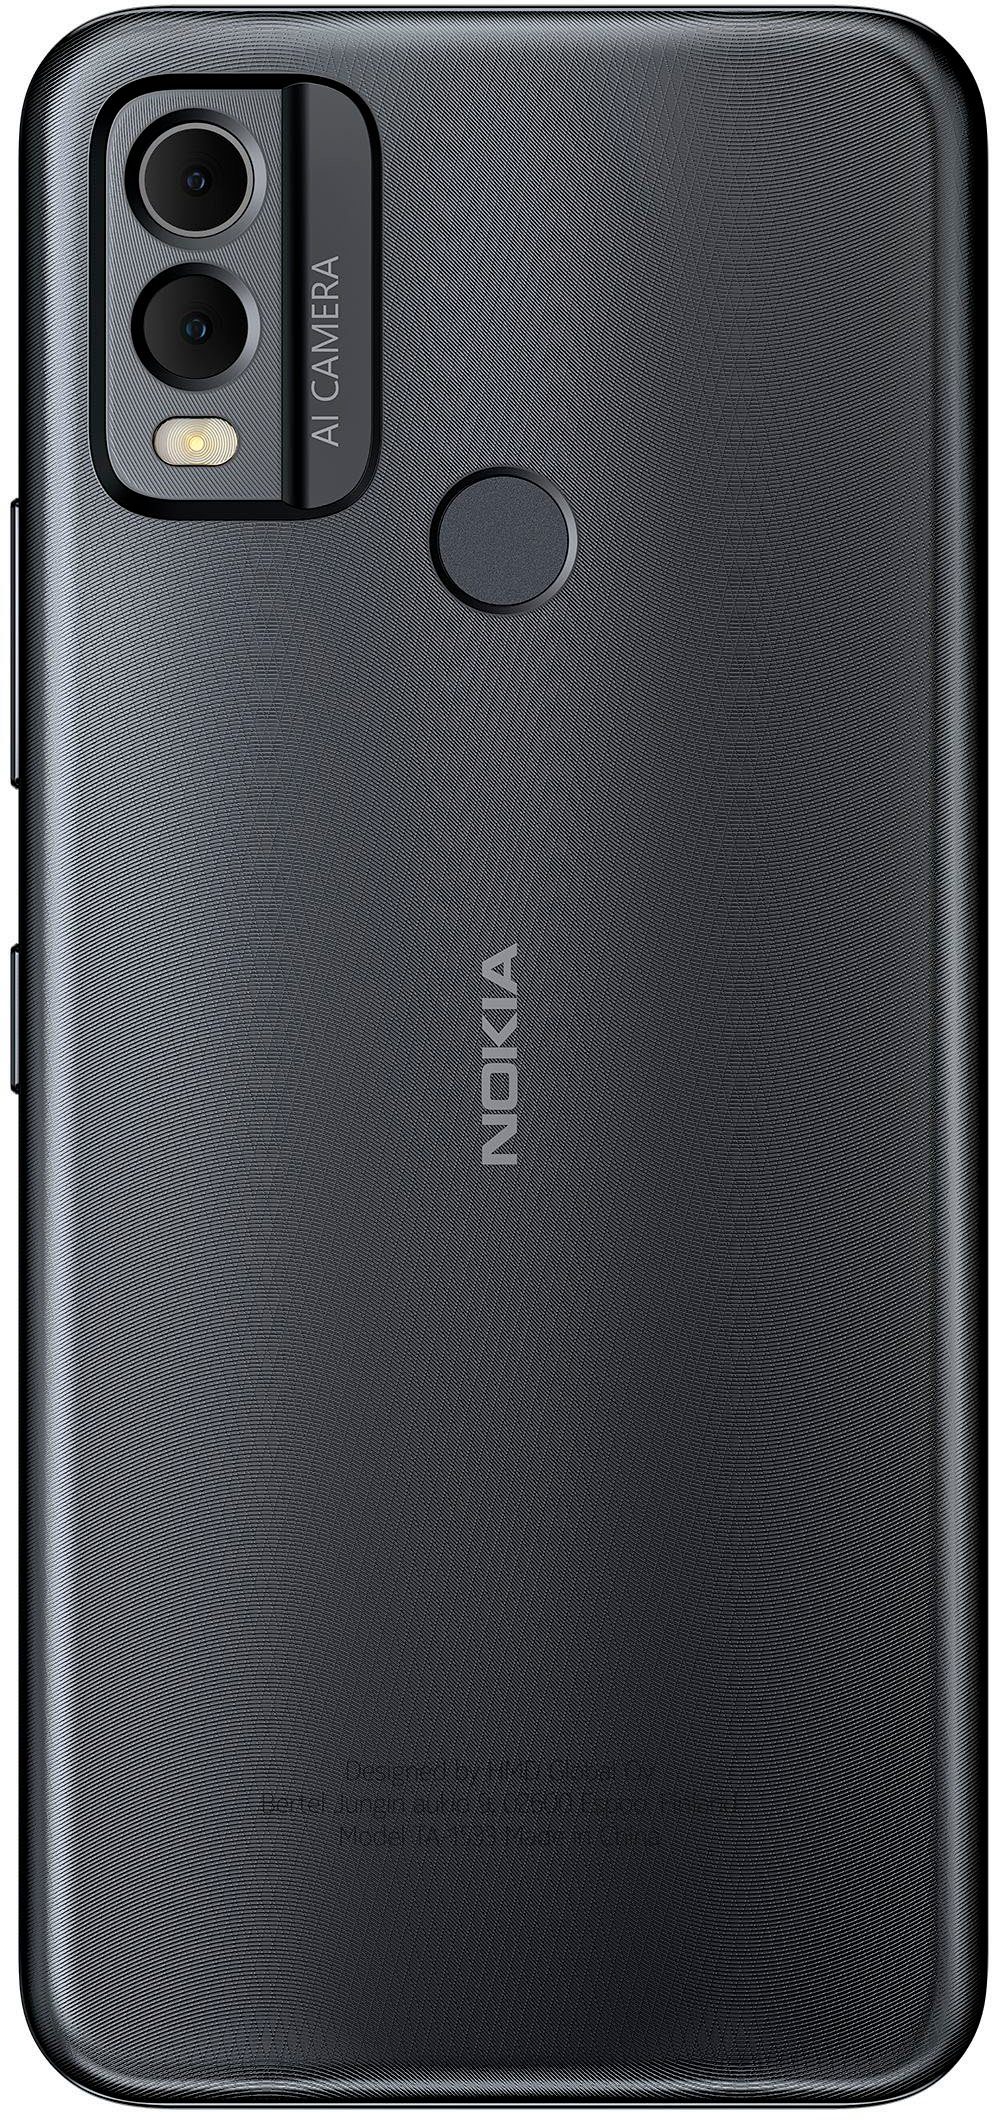 64 Speicherplatz, GB Zoll, Black MP Smartphone Midnight Nokia C22, cm/6,52 (16,56 2+64GB 13 Kamera)